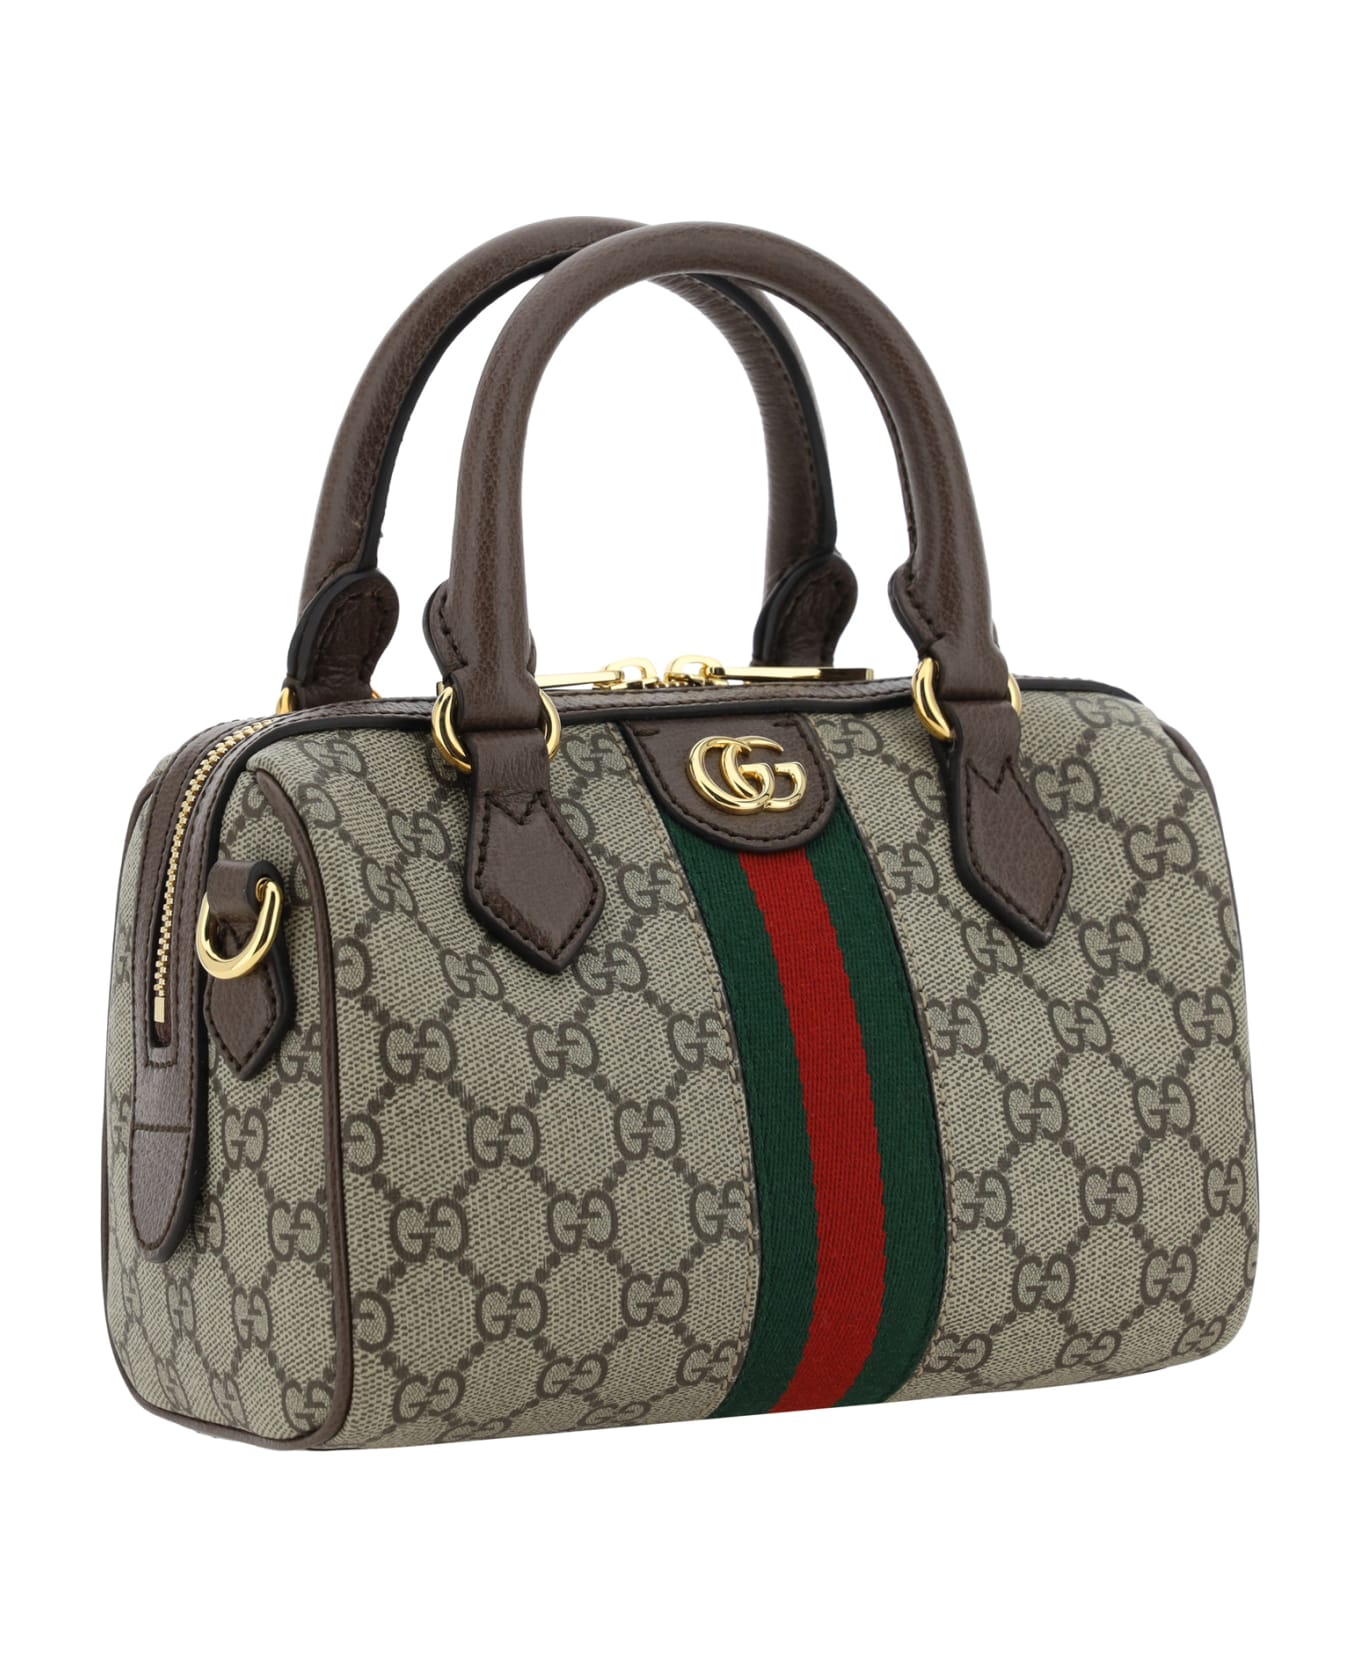 Gucci Ophidia Handbag - Ebony/acero トートバッグ